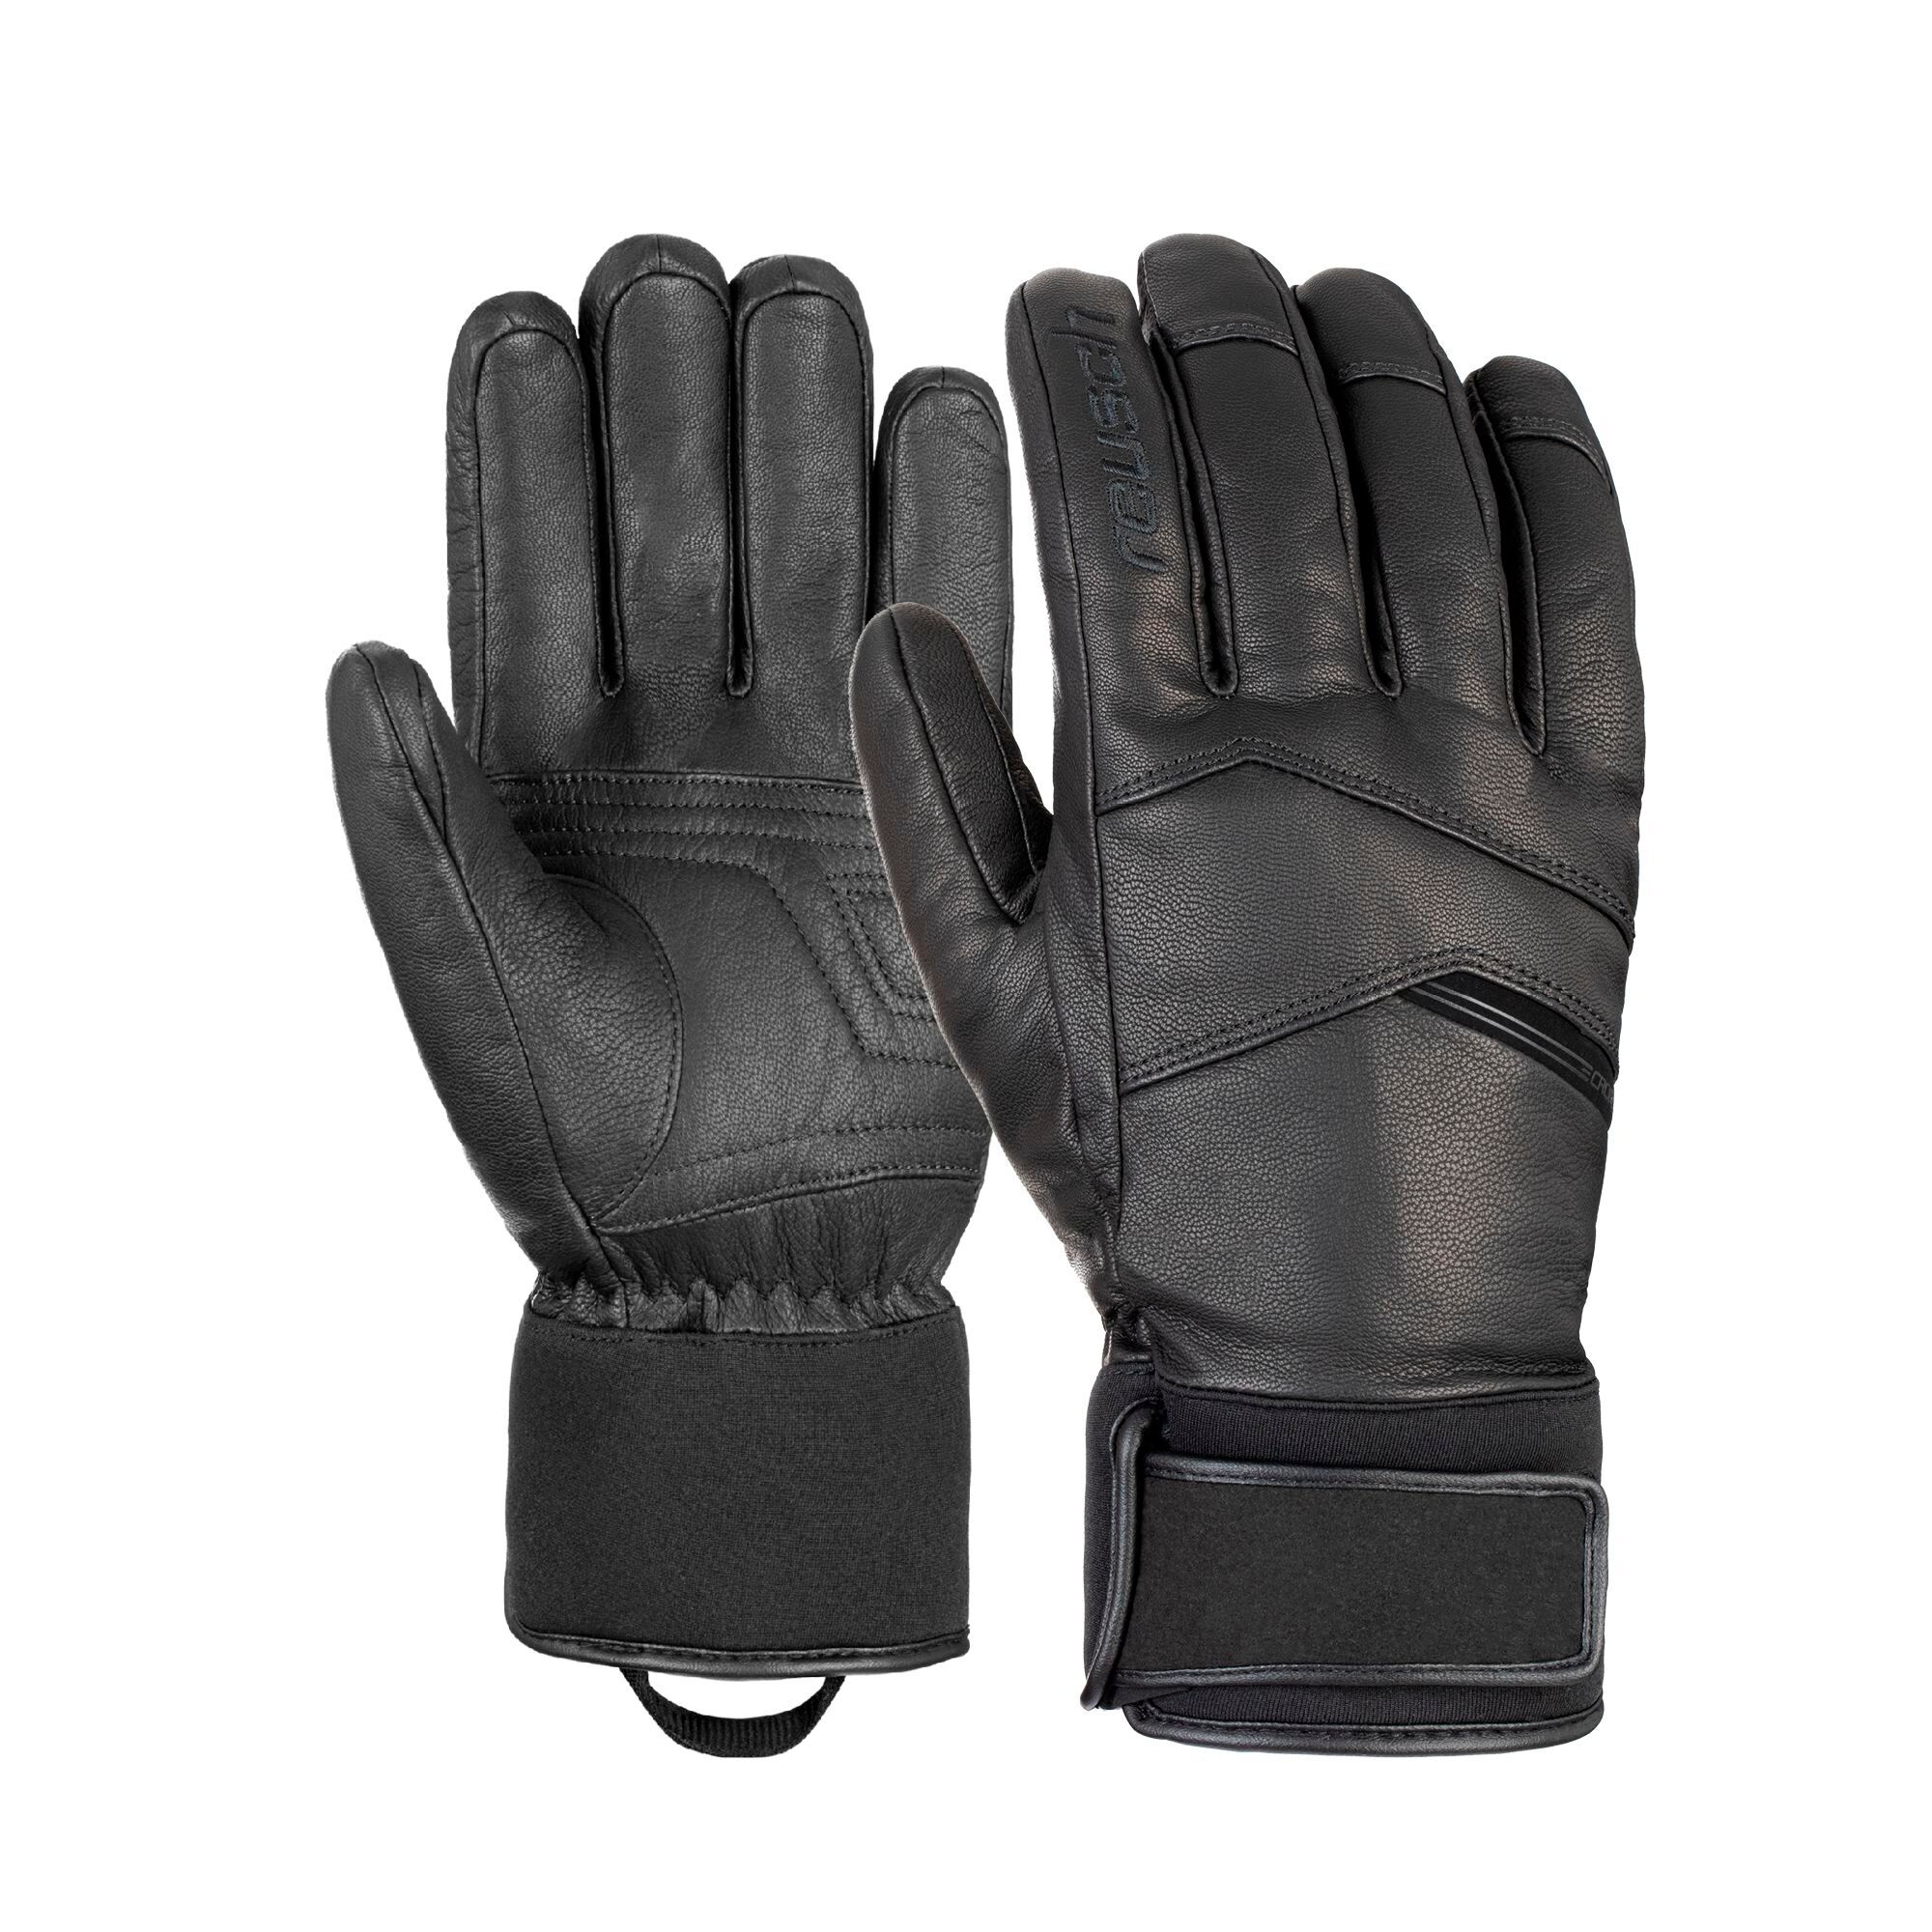 Reusch Cronon - Ski gloves - Men's